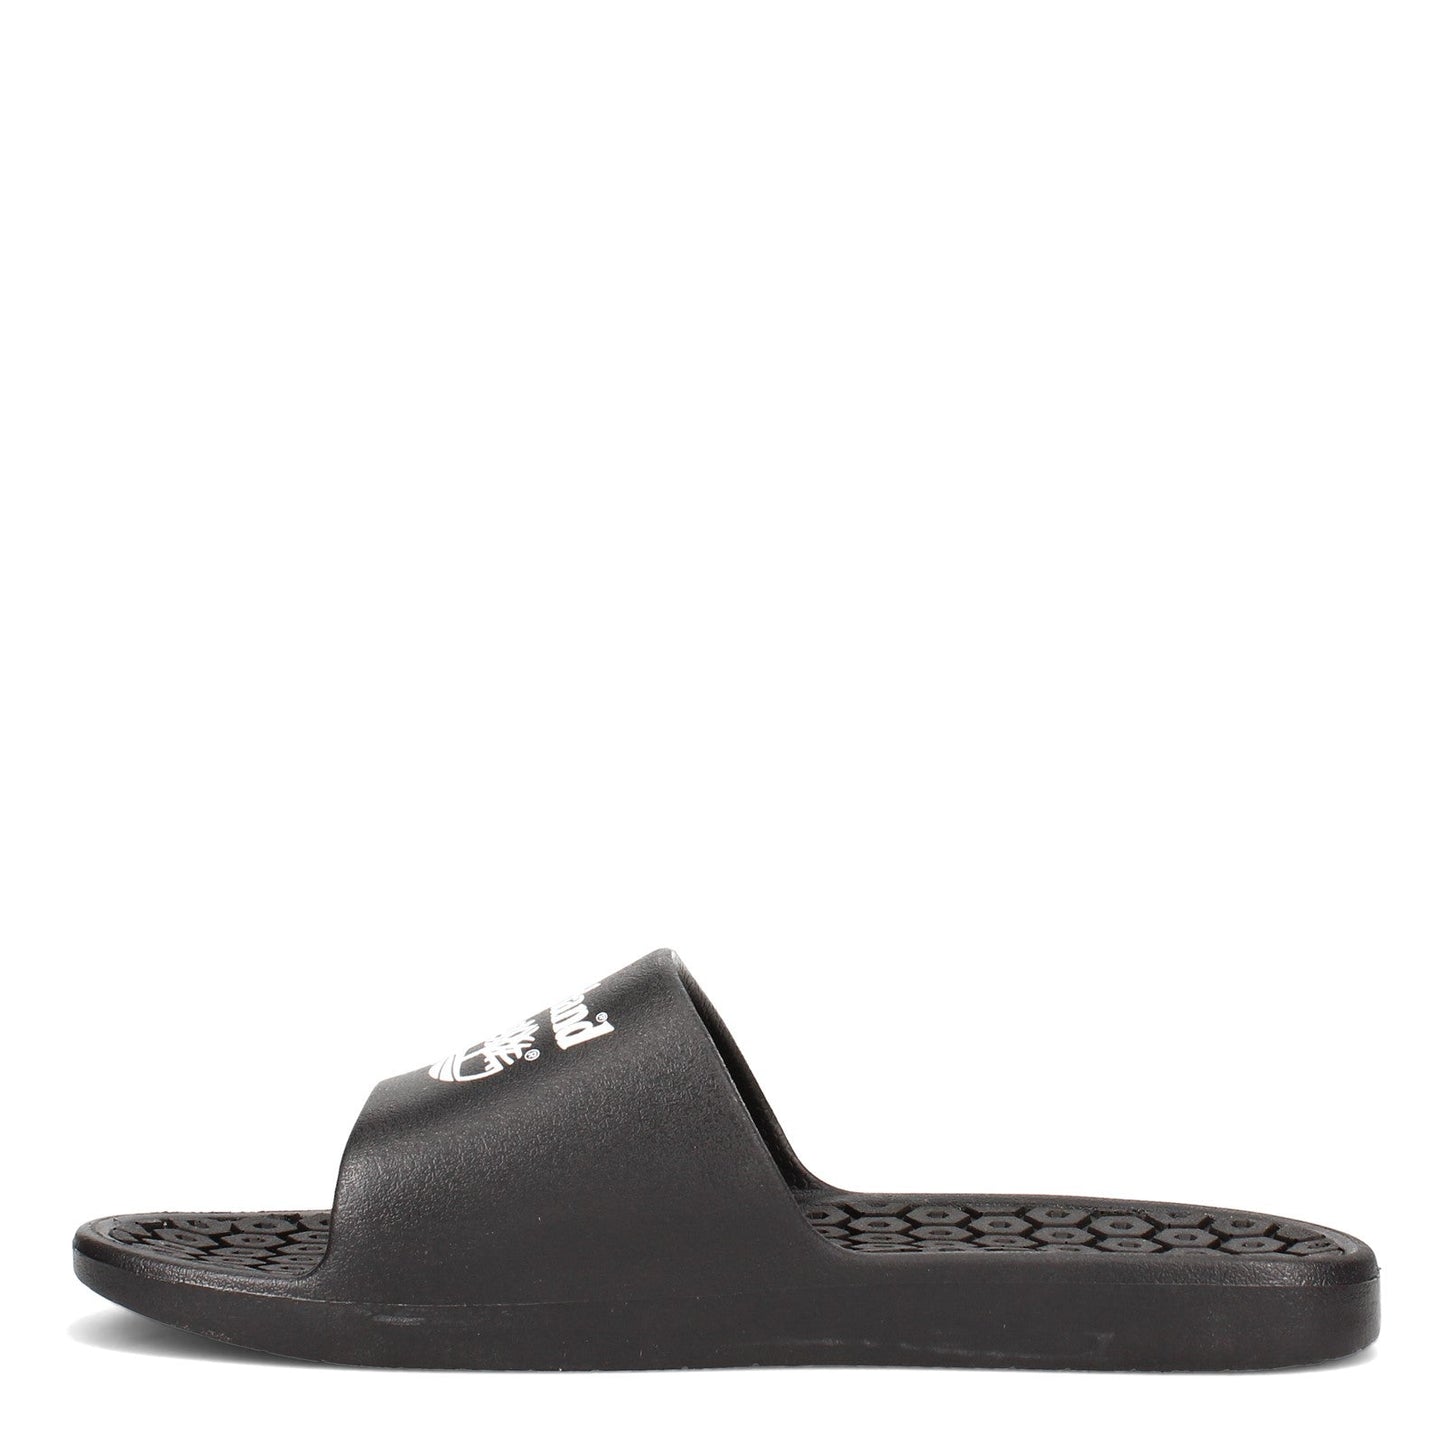 Timberland PRO Mens Size 8M Black White Slides Shower Shoes TB 0A2A7C 001 AFT